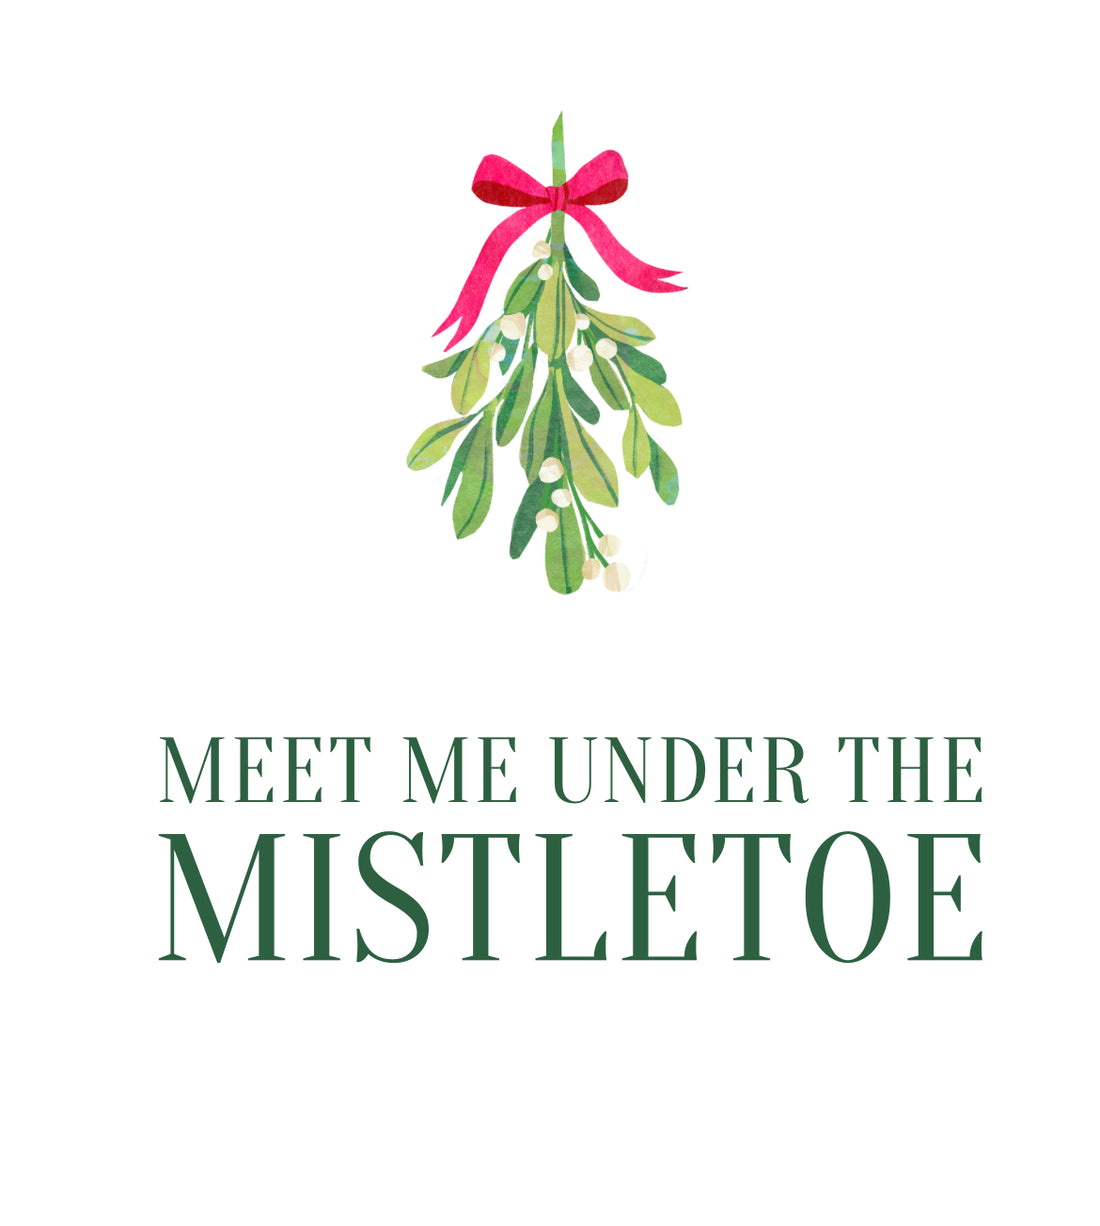 Meet me under the Mistletoe - Hallmark inspired Christmas story